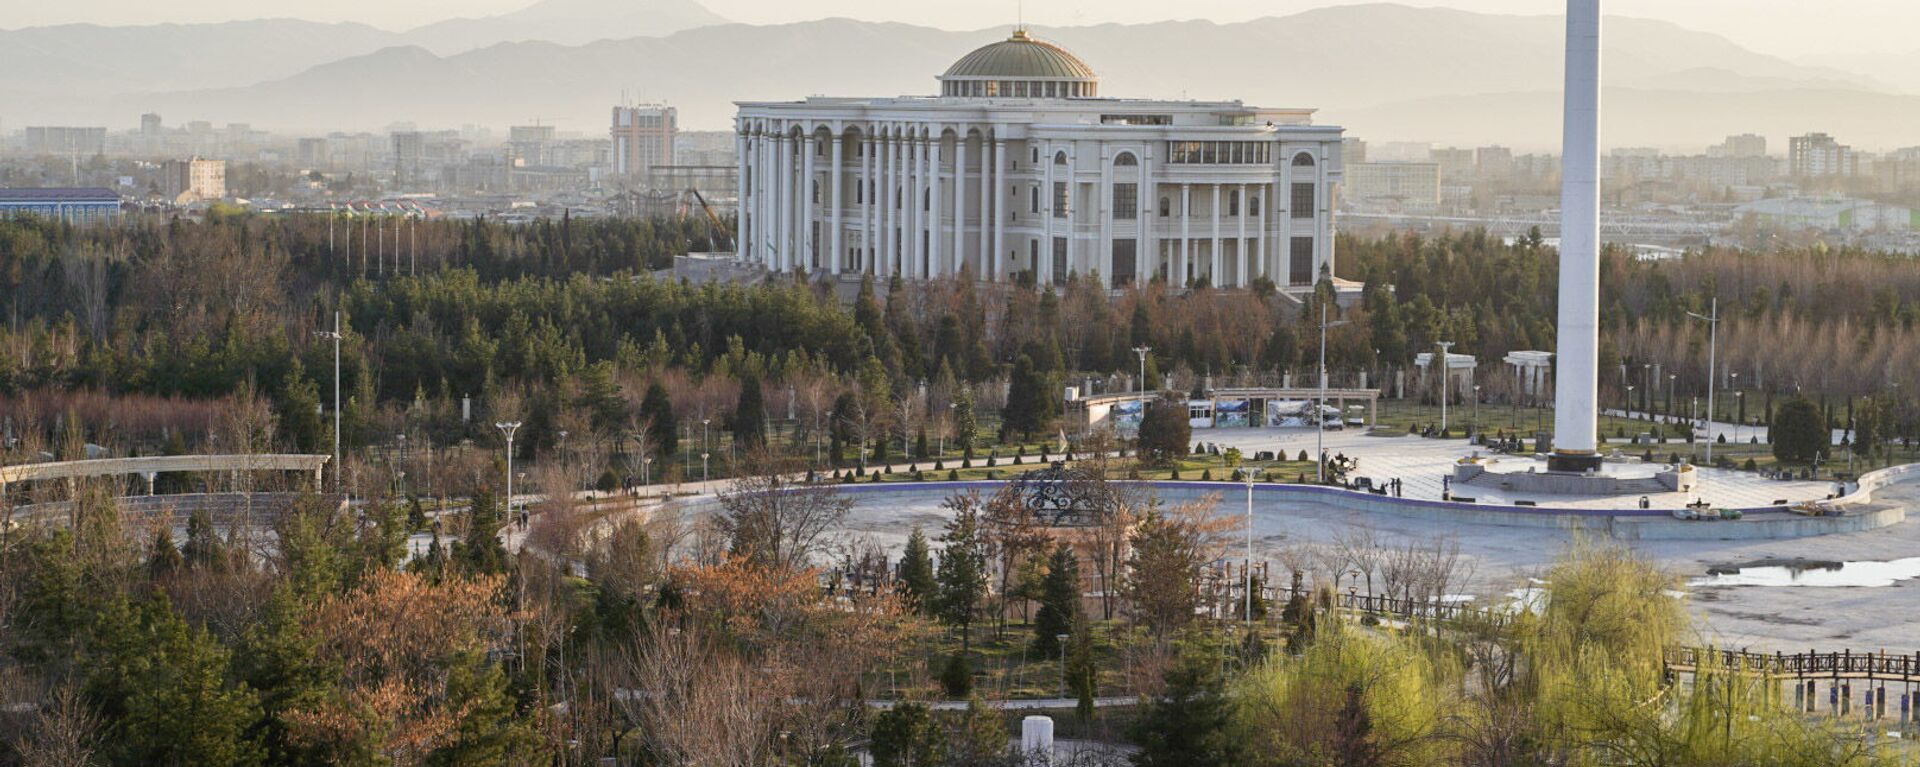 Вид на Дворец президента в Душанбе - Sputnik Таджикистан, 1920, 18.09.2020